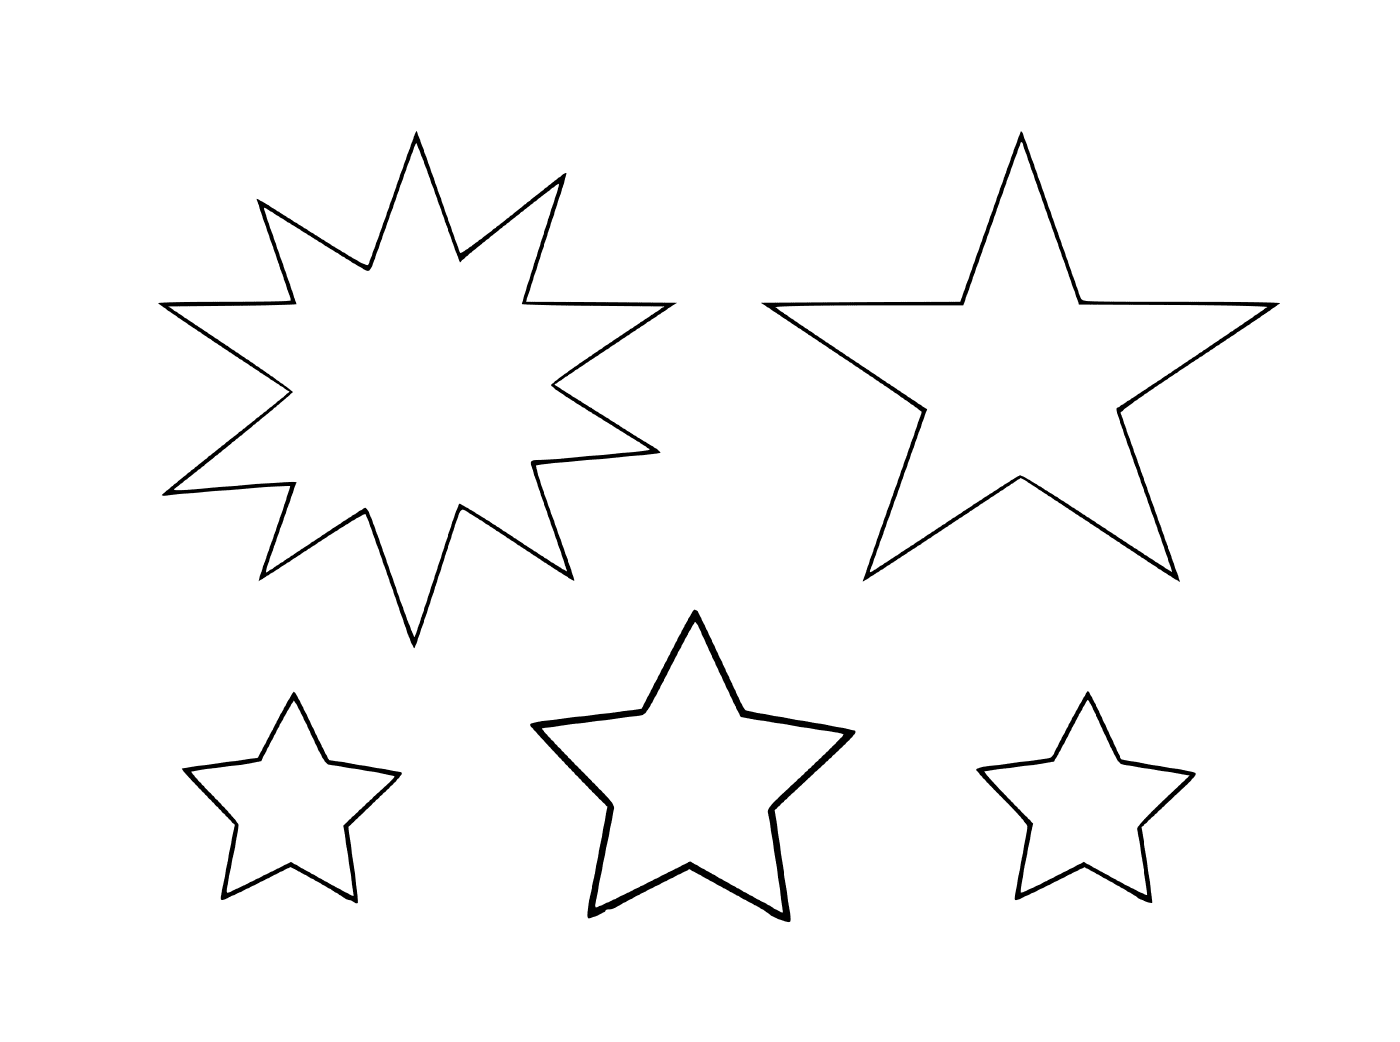  Un set di sei stelle diverse 